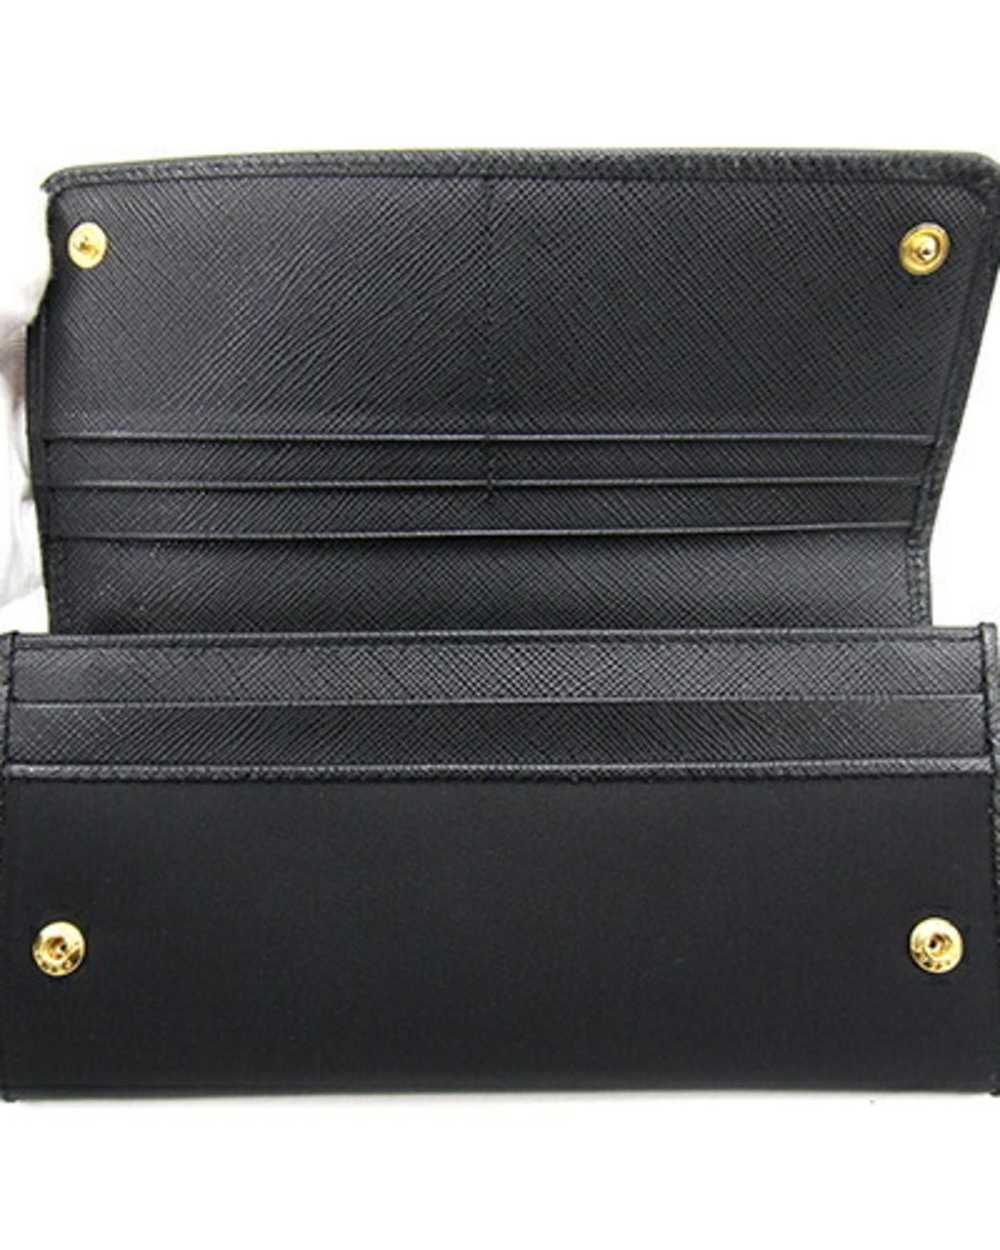 Prada Black Leather Bi-Fold Wallet with Multiple … - image 3